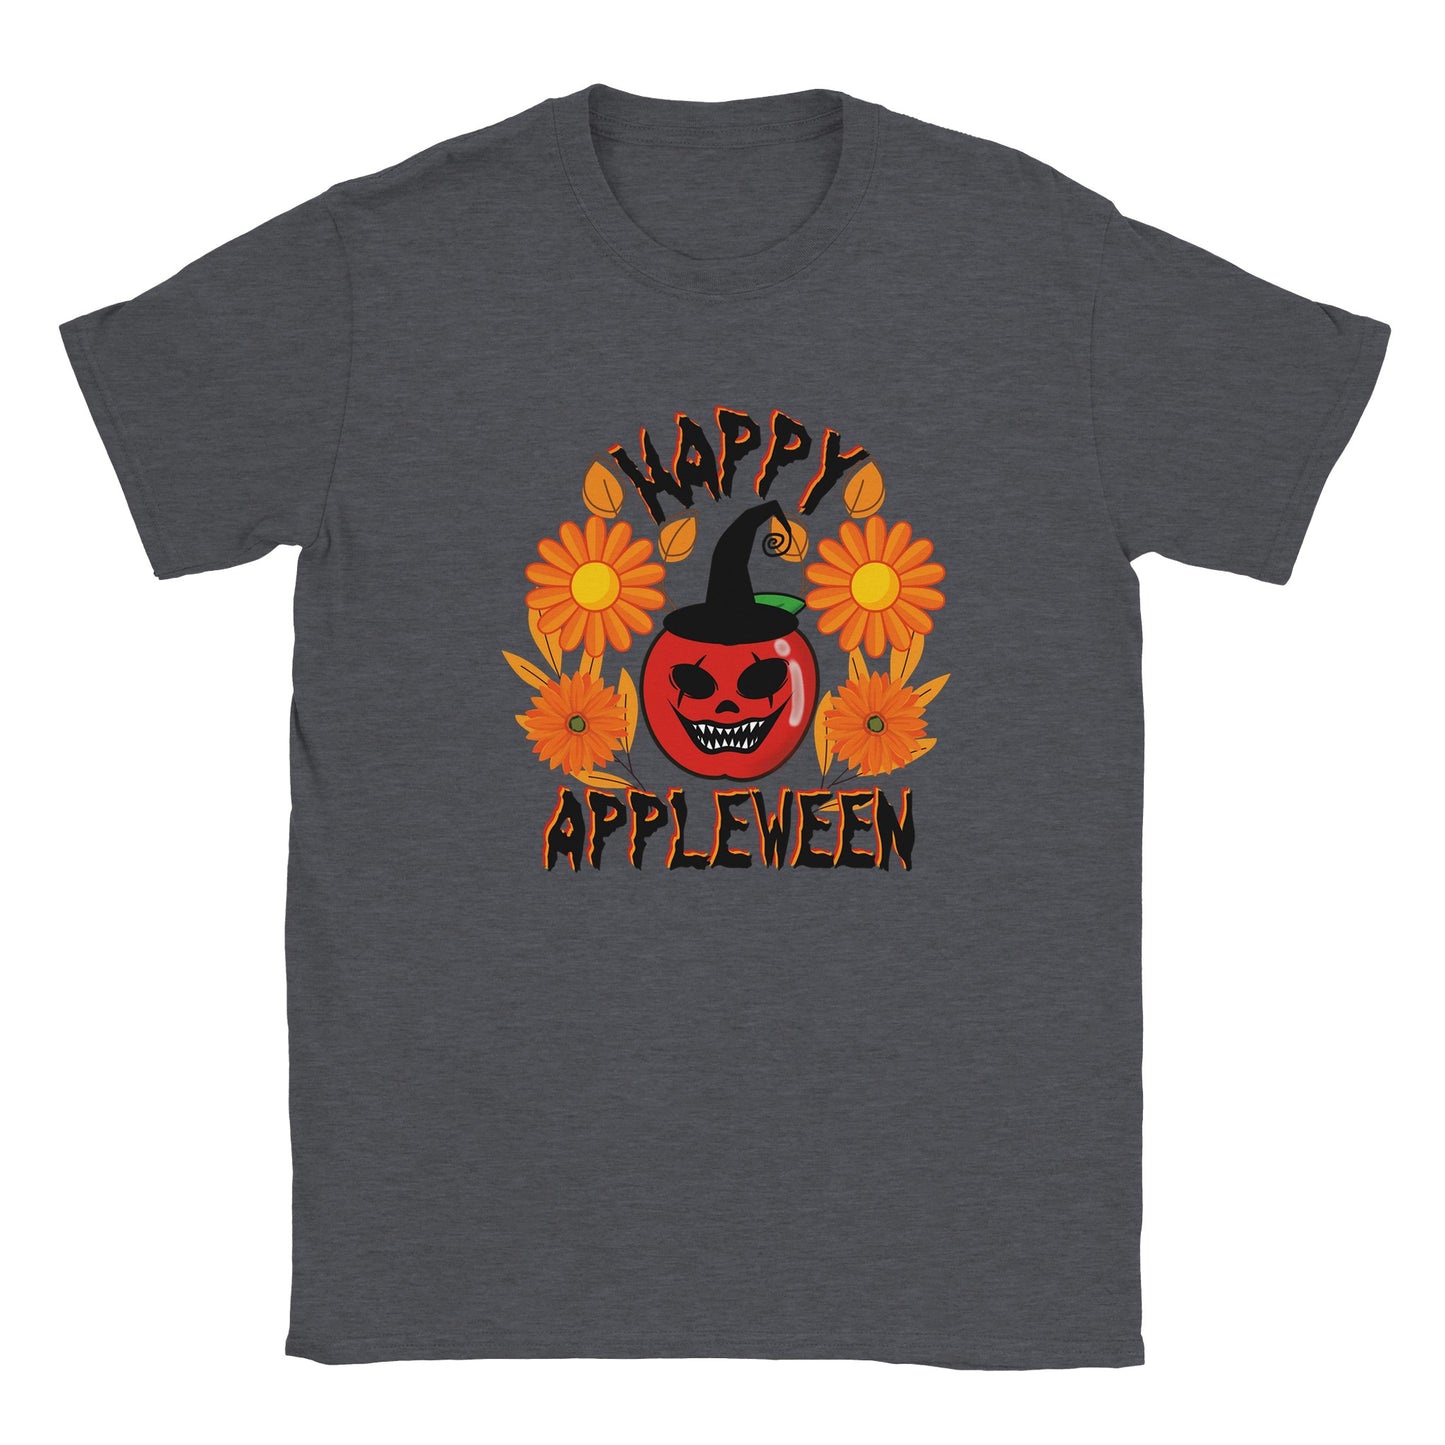 Camiseta de halloween con diseño único